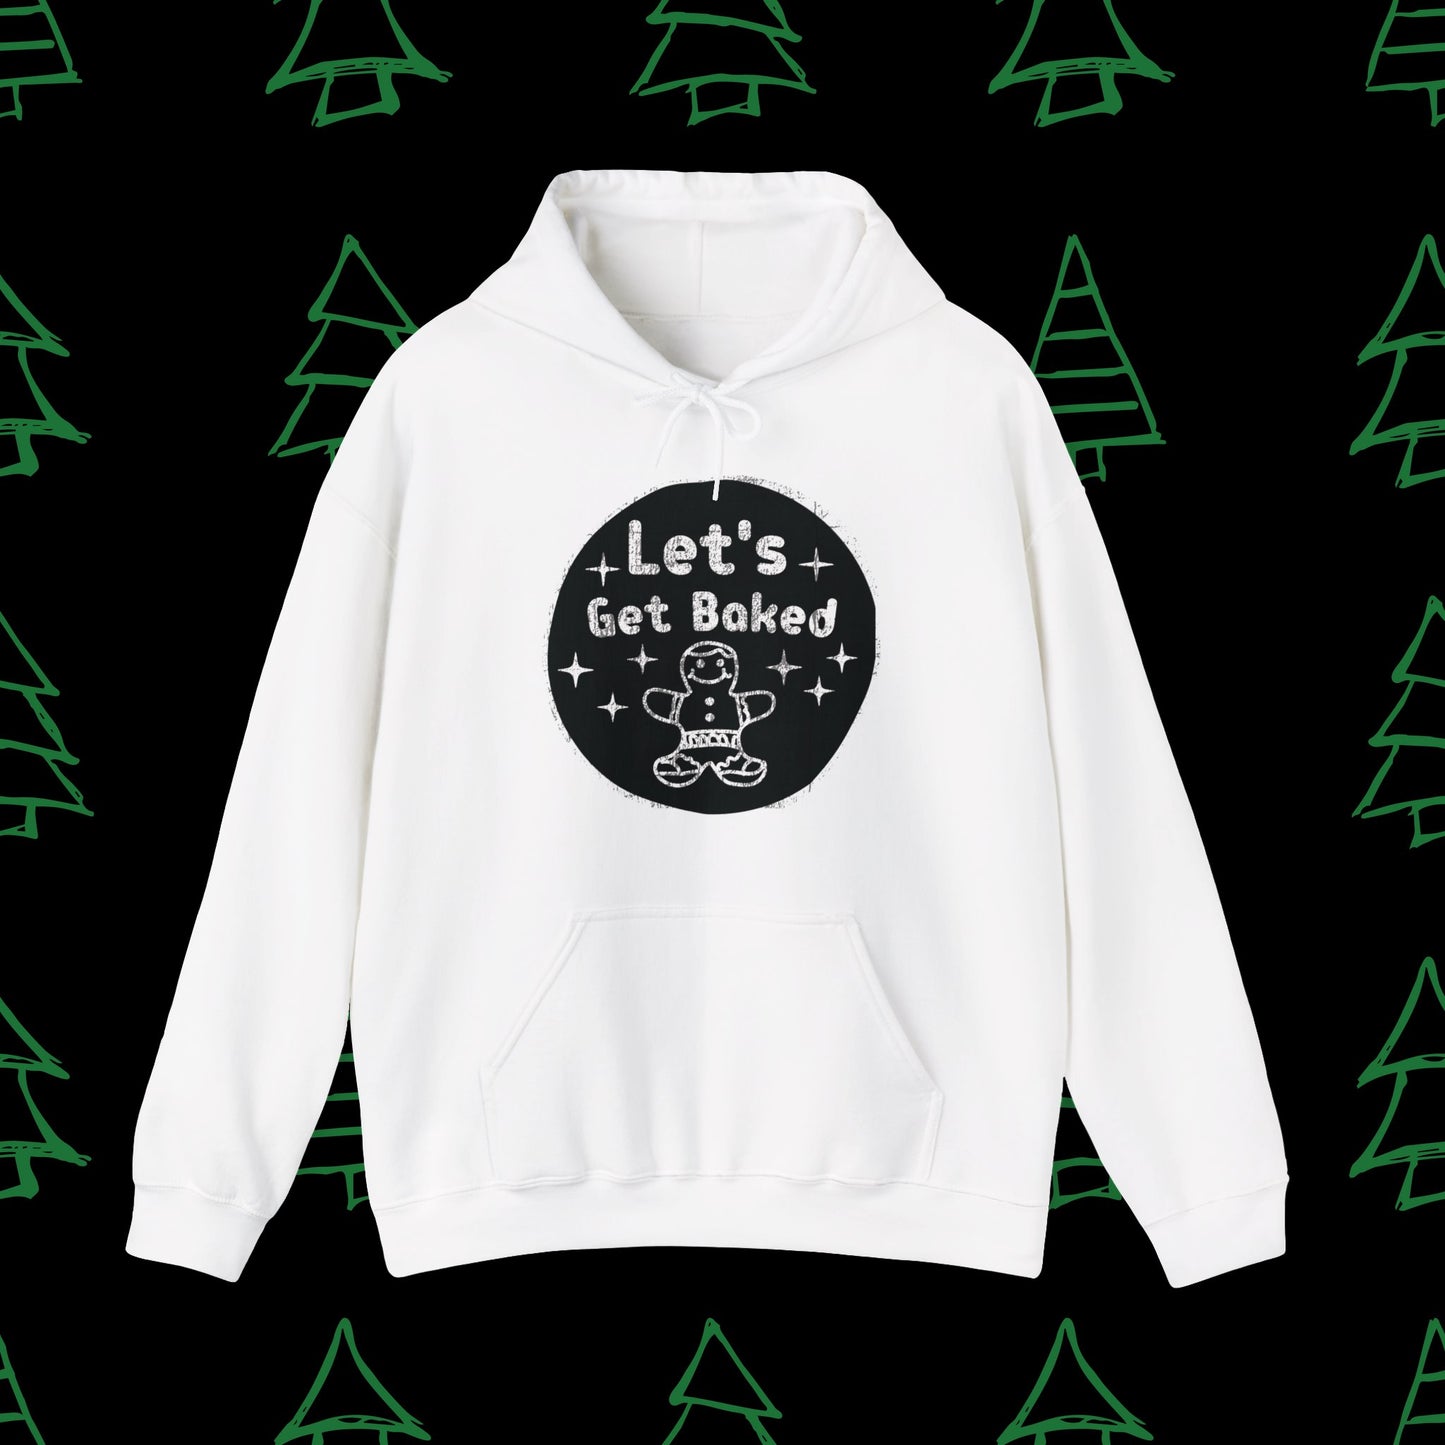 Christmas Hoodie - Let's Get Baked - Mens Christmas Shirts - Adult Christmas Hooded Sweatshirt Hooded Sweatshirt Graphic Avenue White Adult Small 